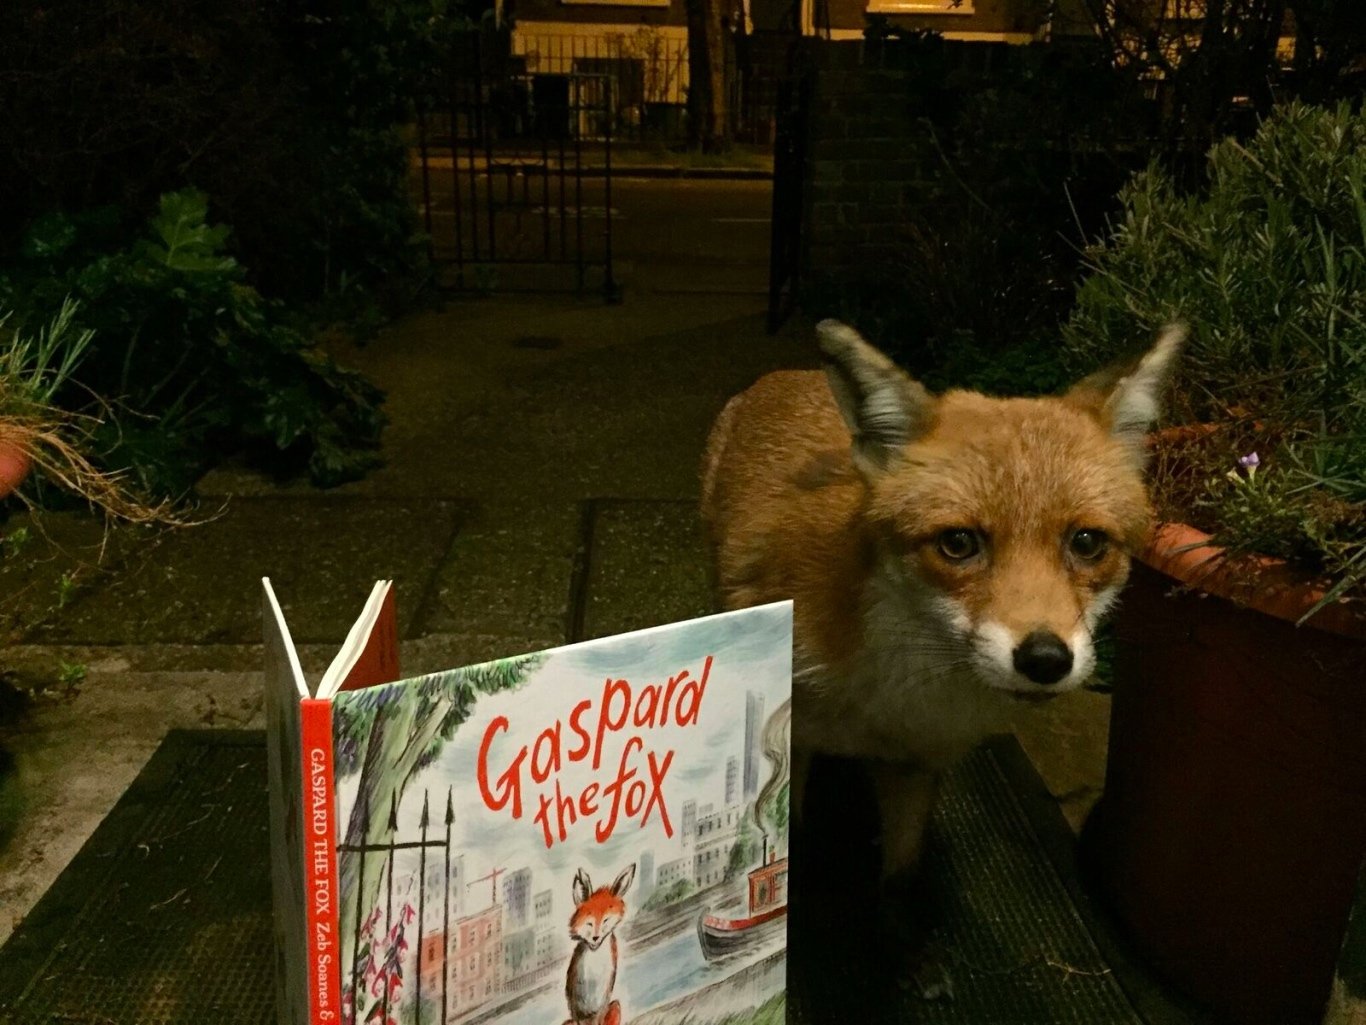 Gaspard the fox reads his book